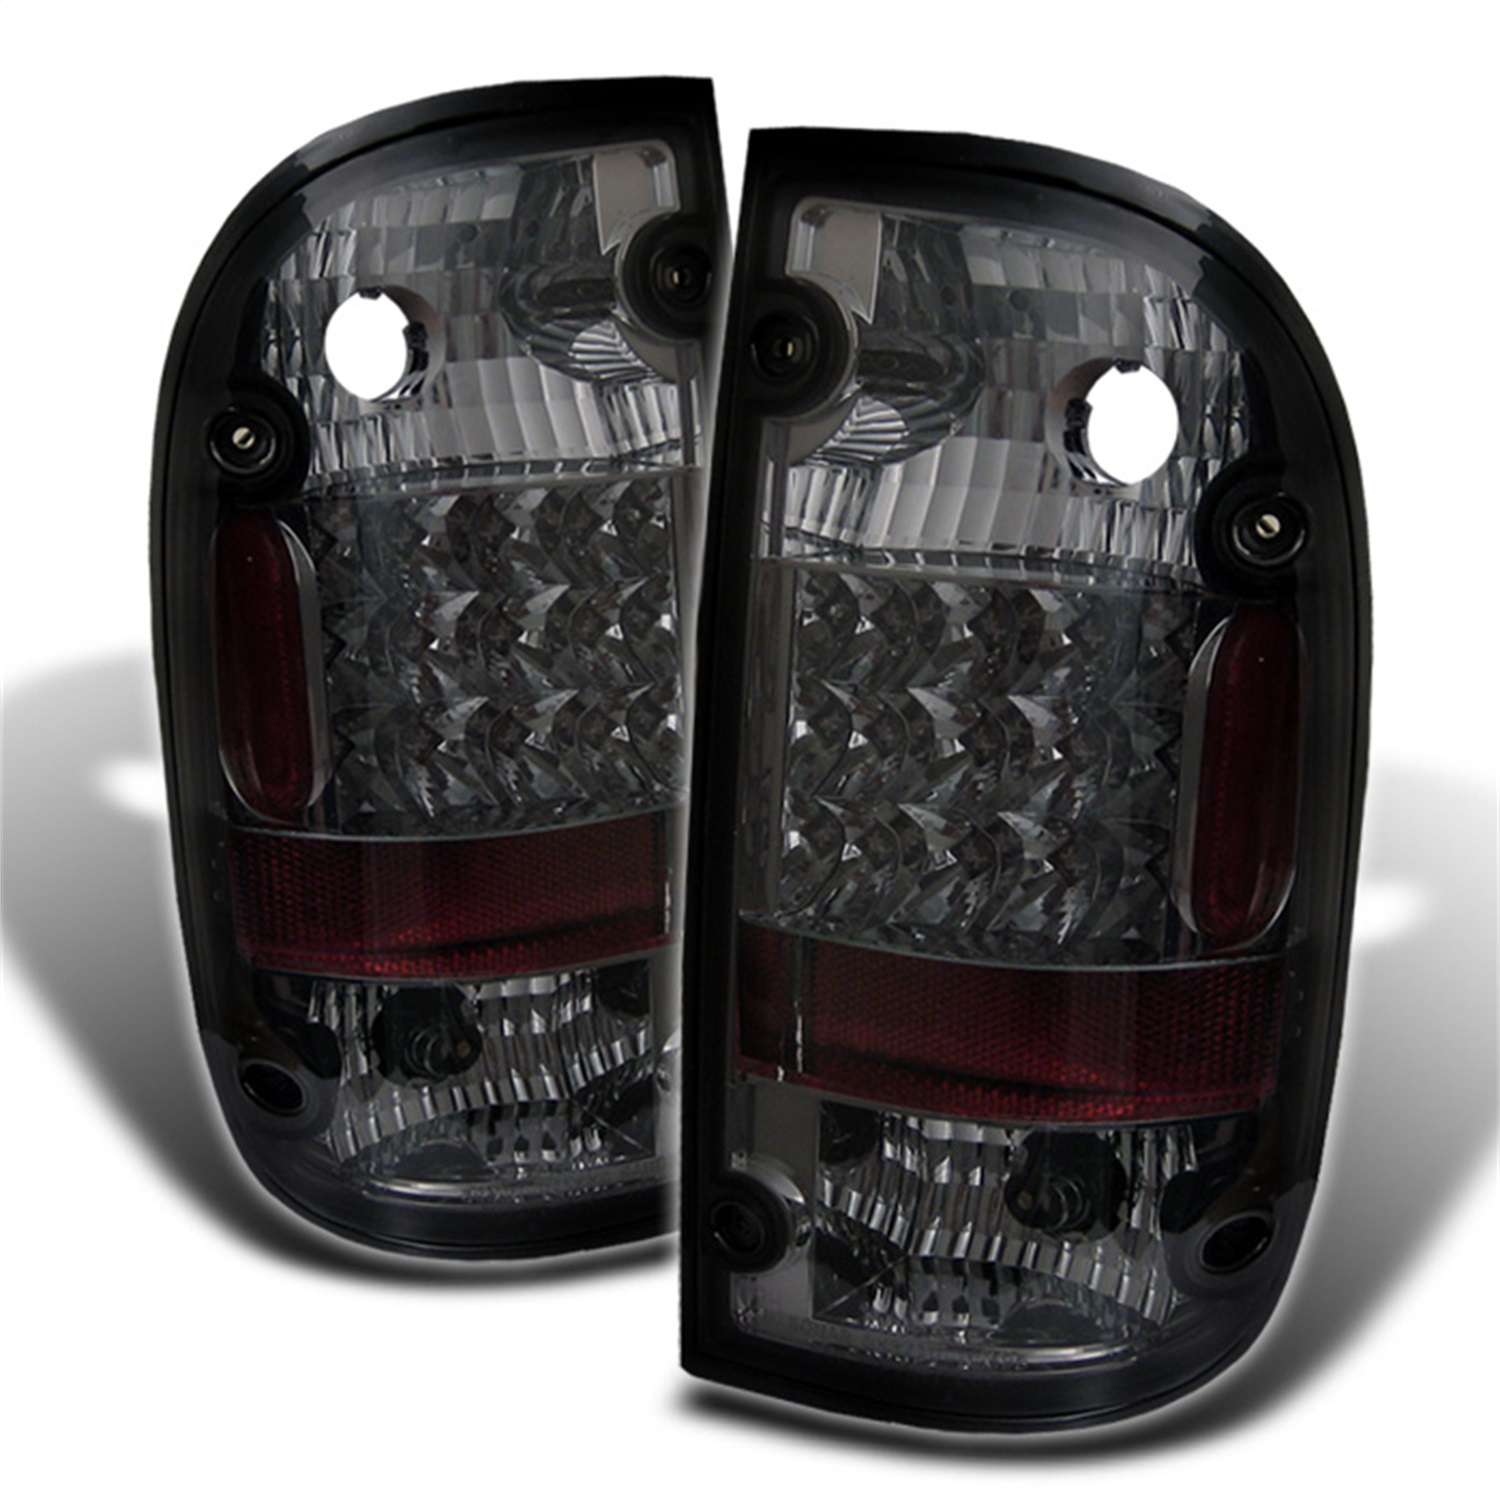 Spyder Auto 5007889 LED Tail Lights Fits 01-04 Tacoma